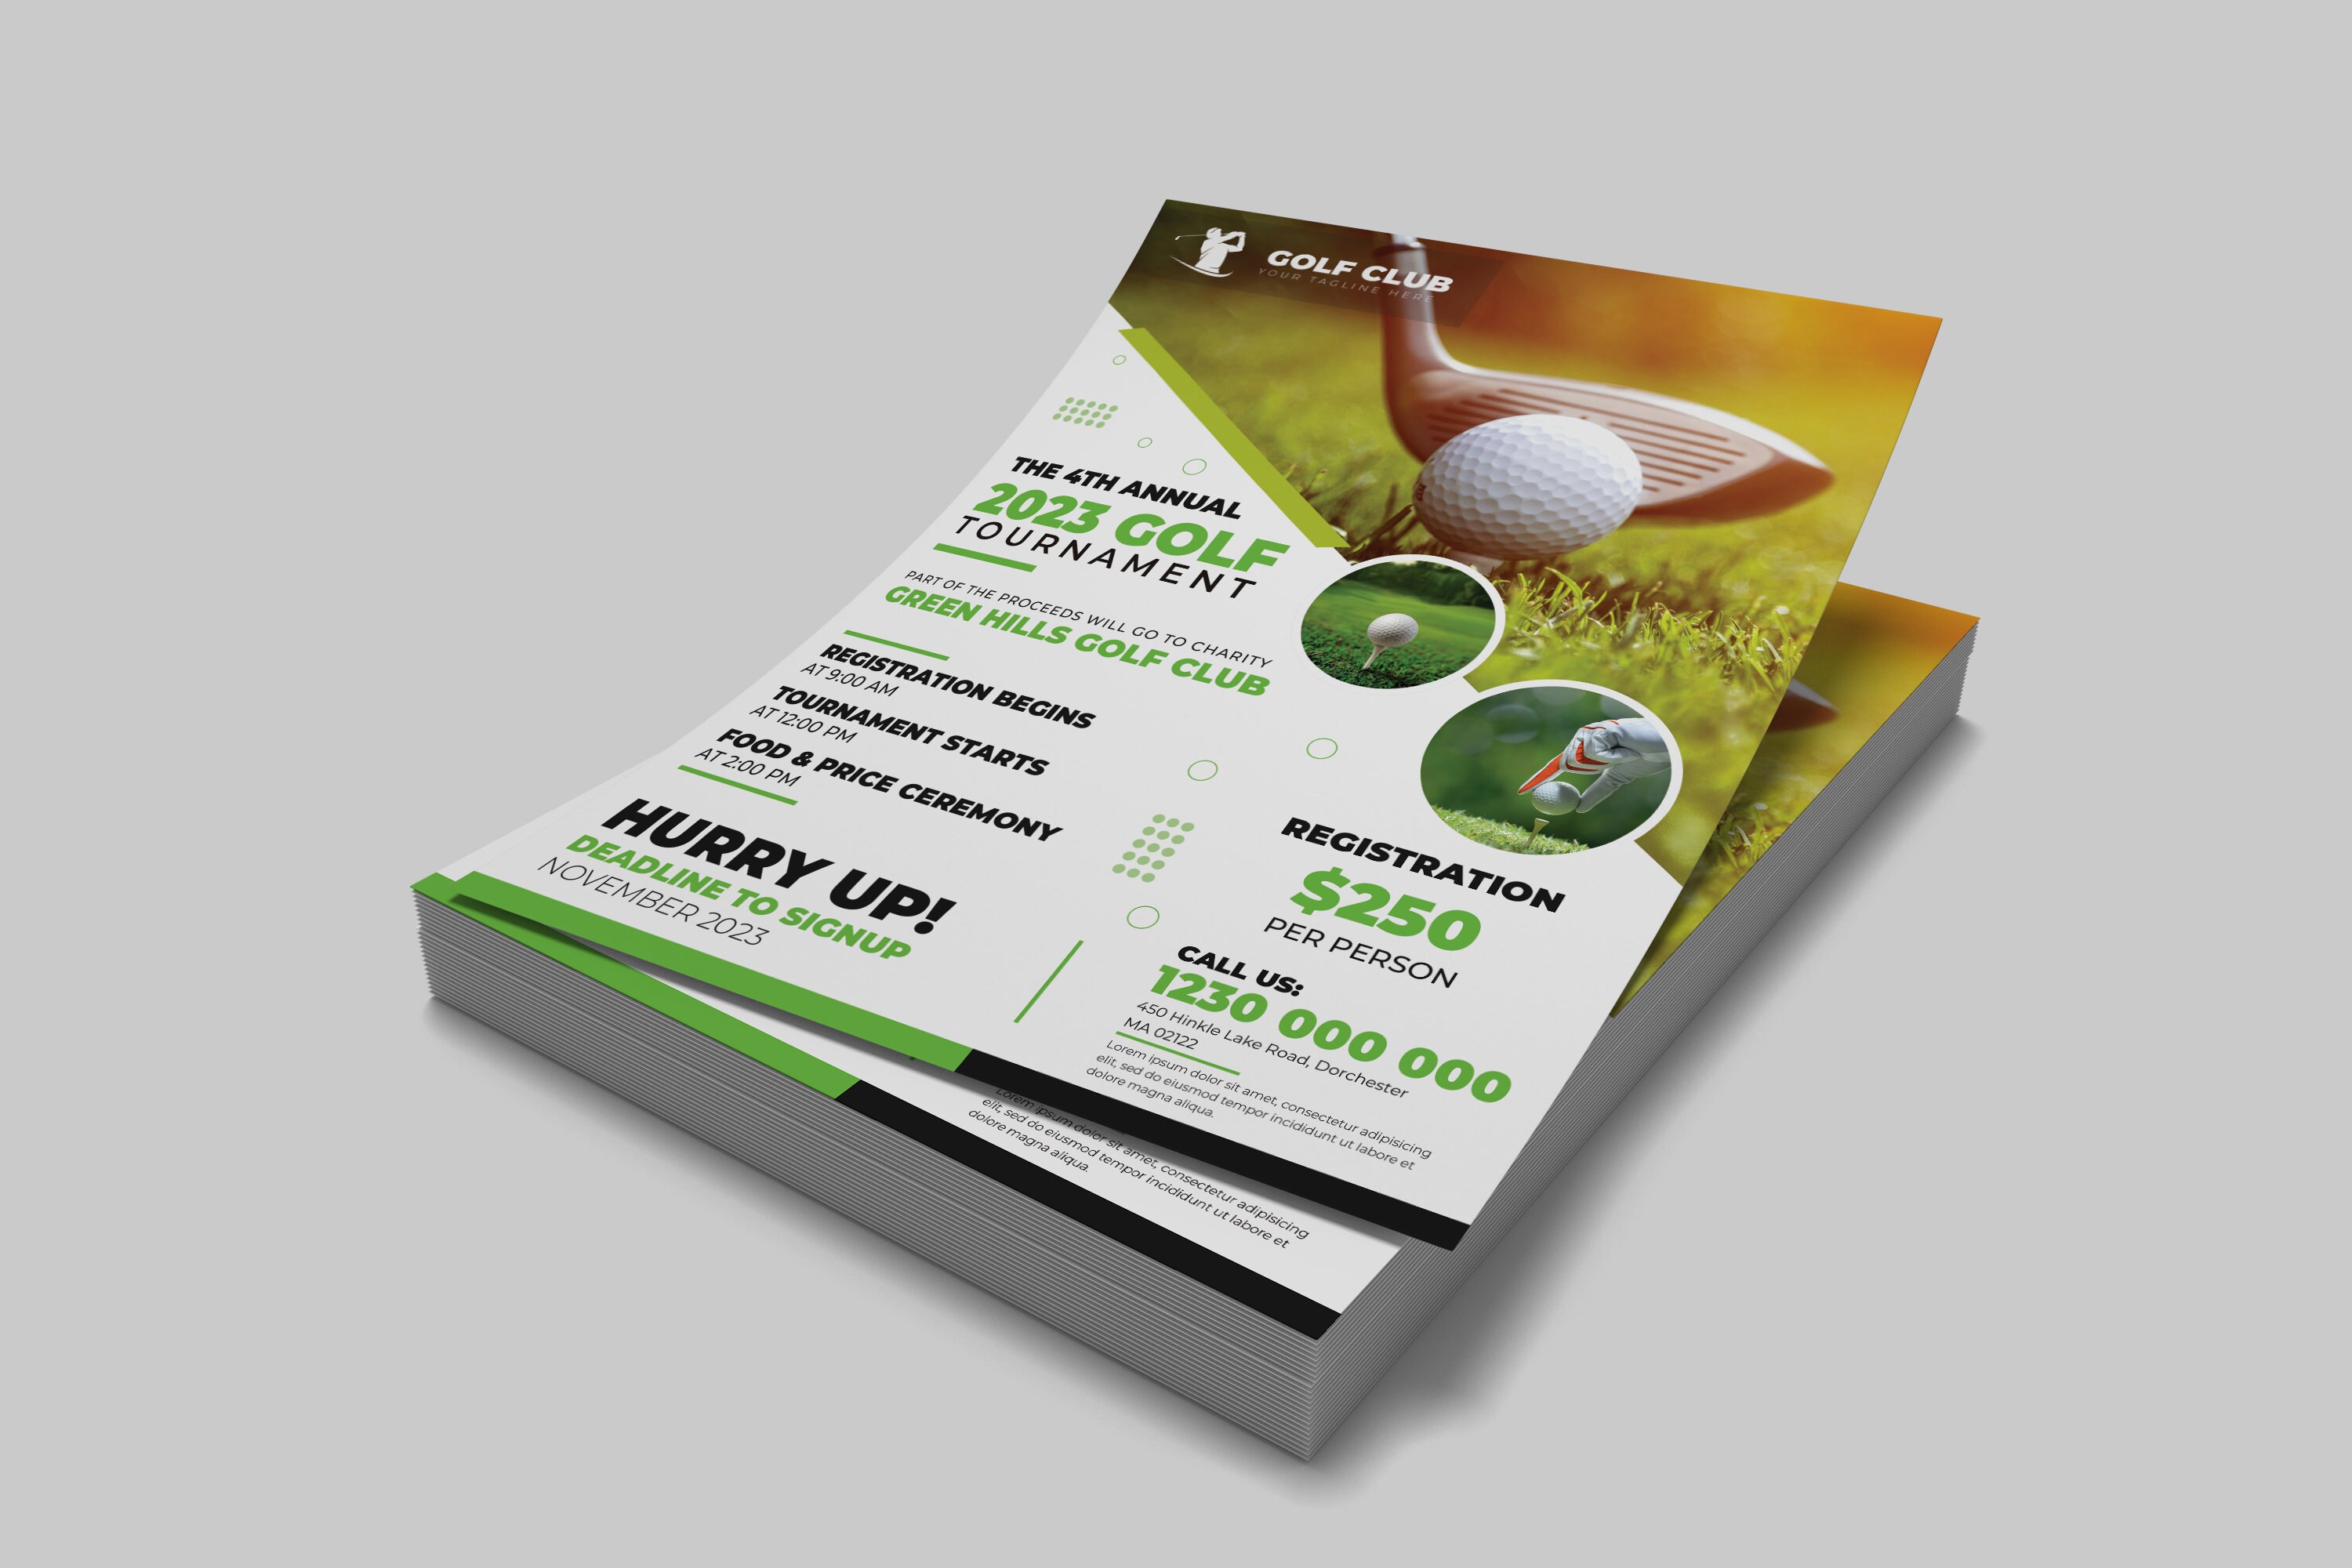 Golf Tournament Flyer Template by Hotpindesigns on DeviantArt